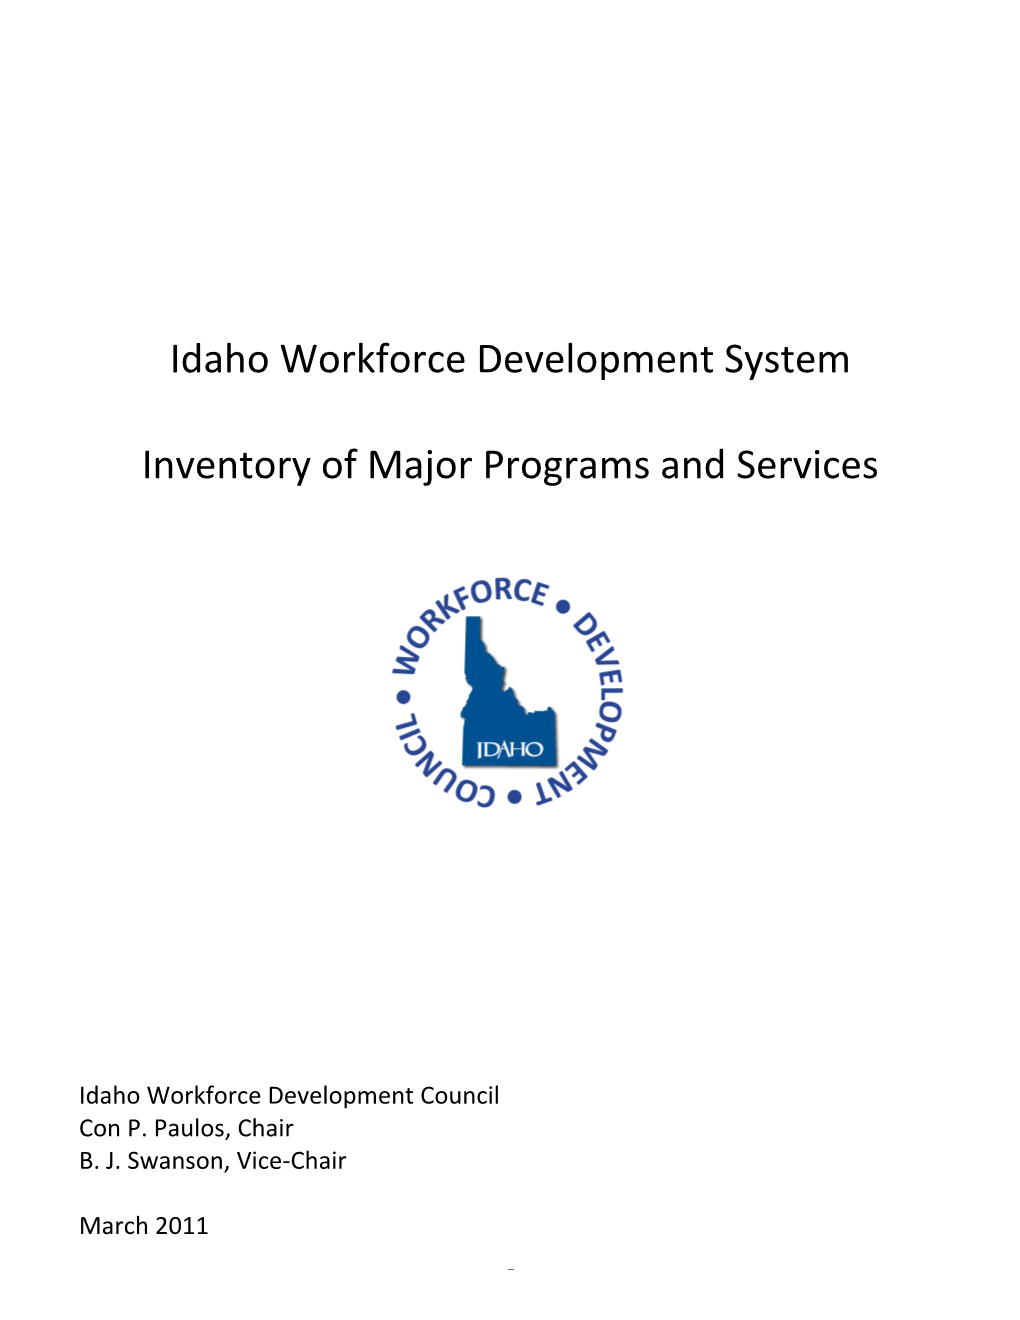 Idaho Workforce Development Council System